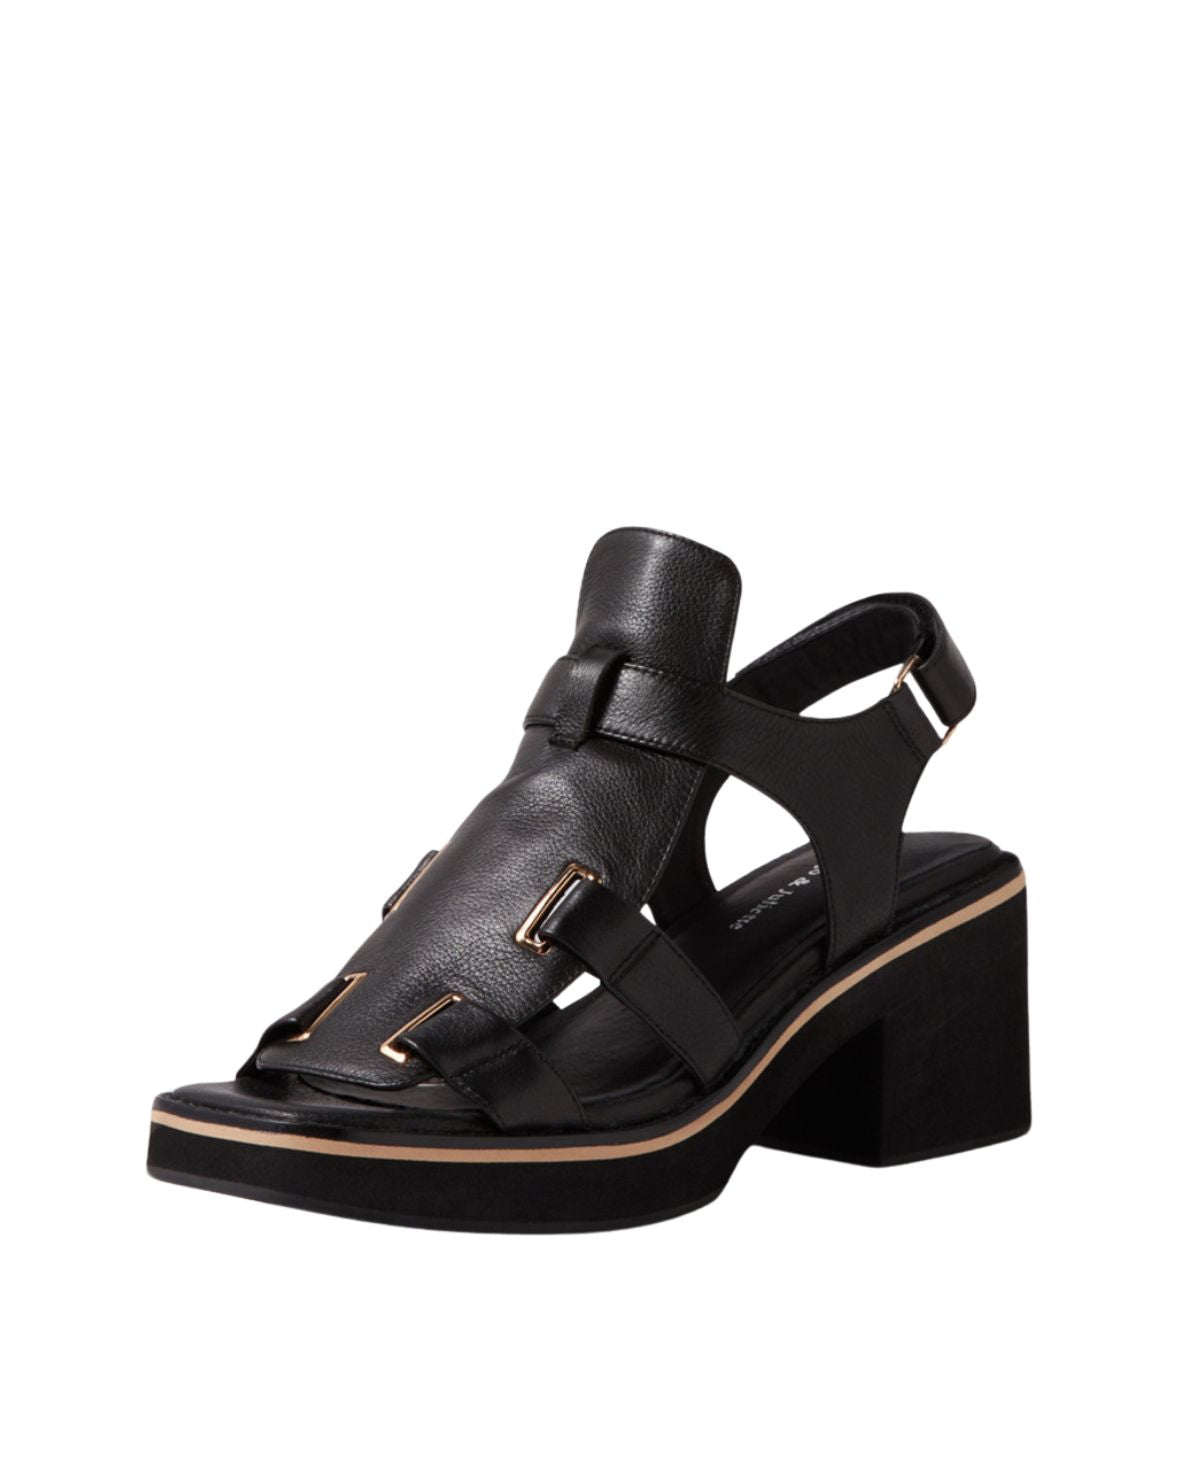 Jennis Tan/Black Leather Sandals